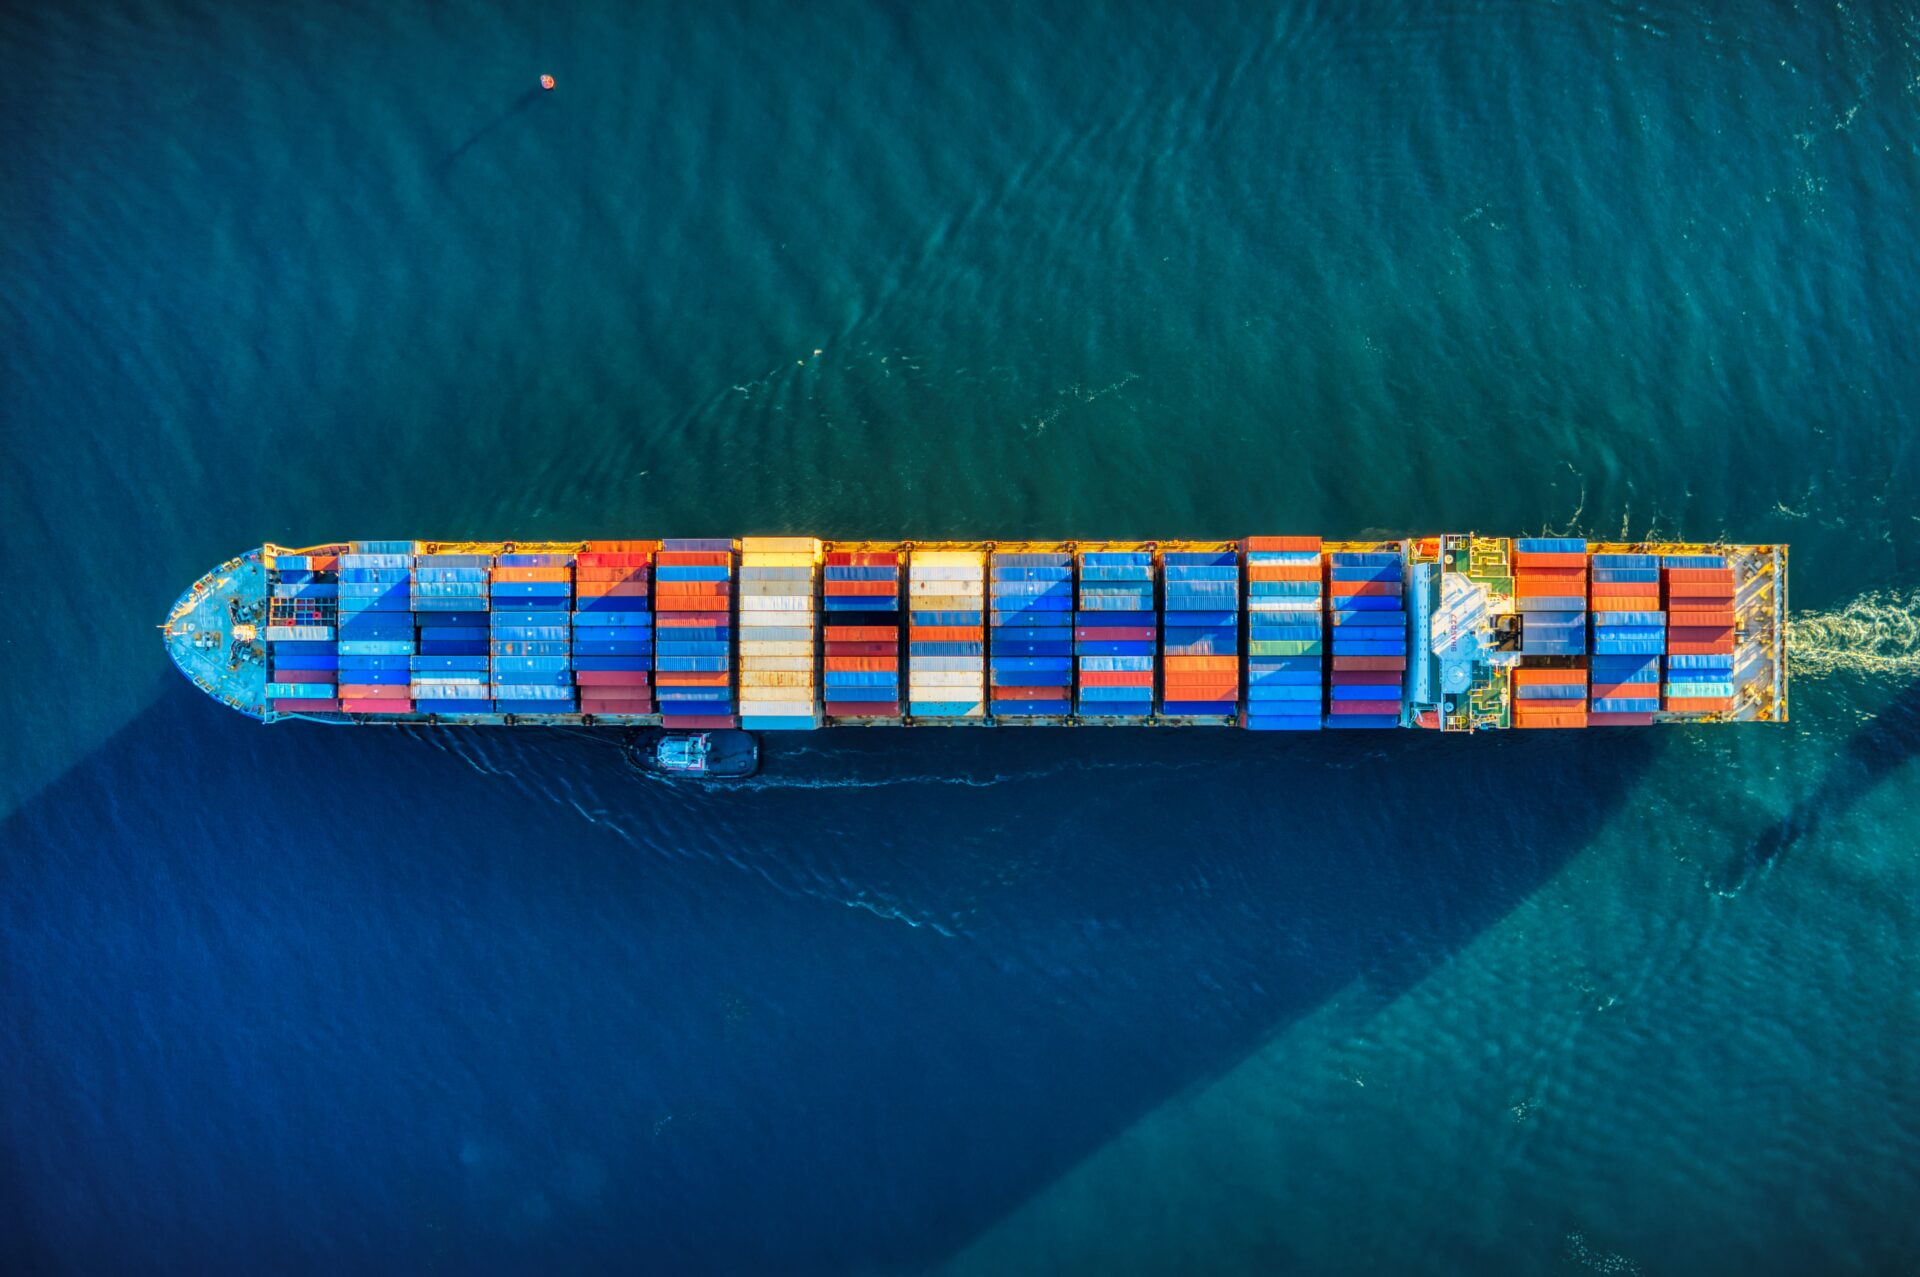 Port, Transportation, warehouse, Vancouver, distribution, global logistics